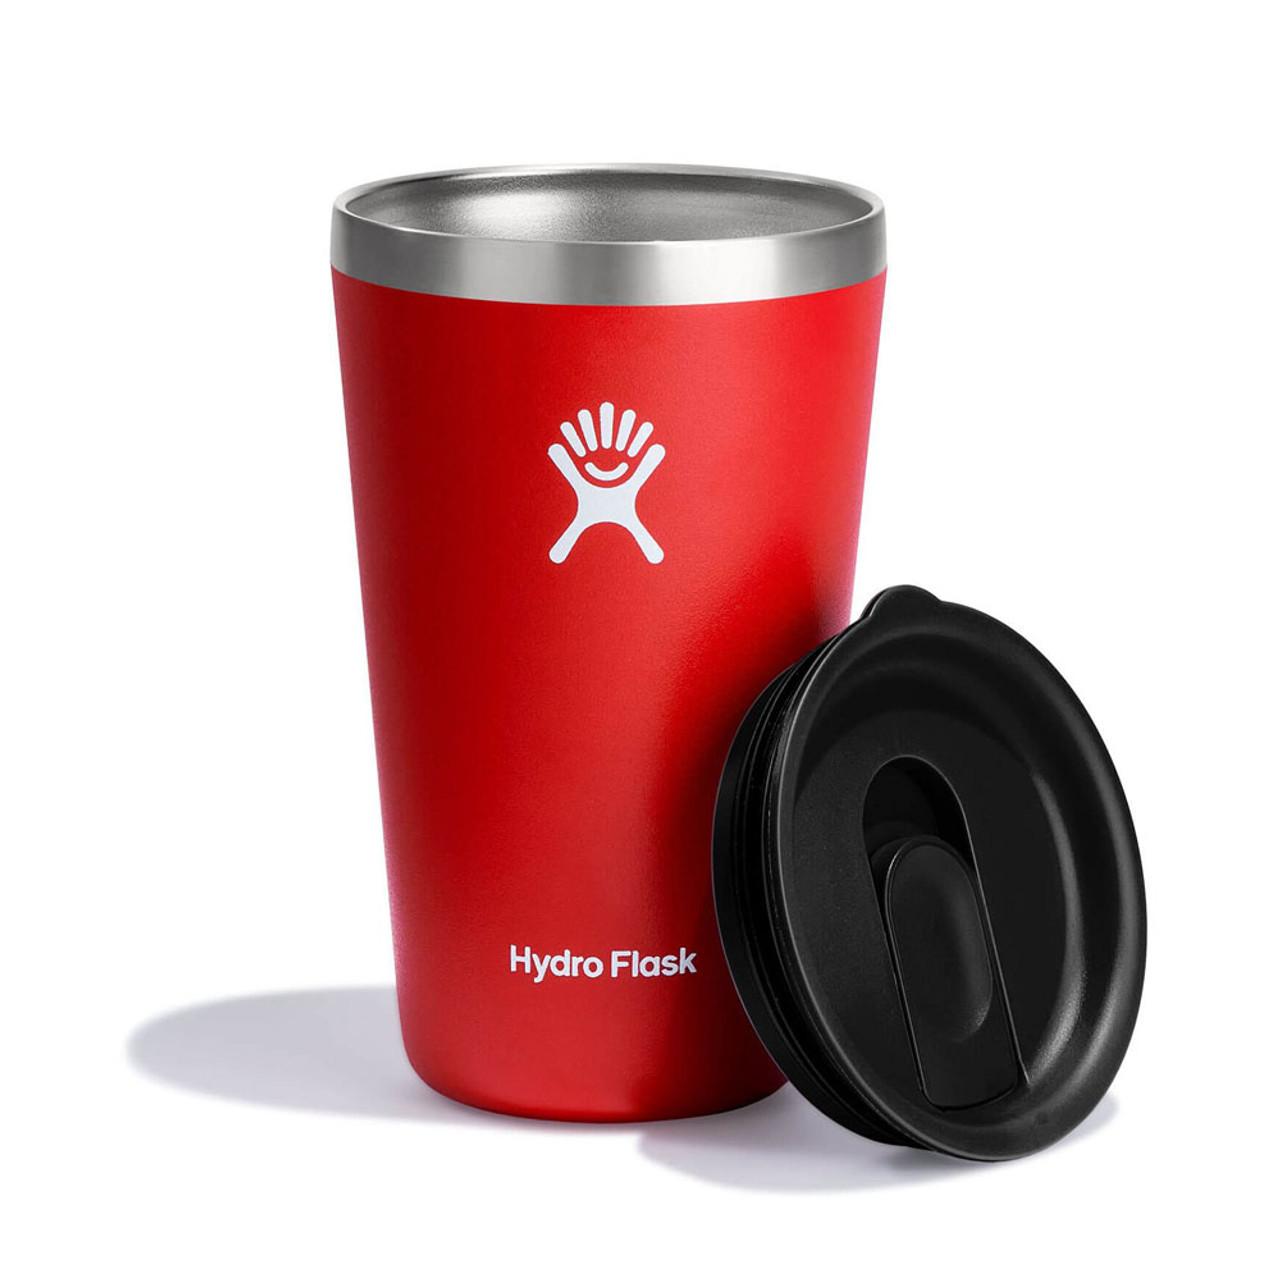 Hydro Flask 20 oz All Around Tumbler w/ Straw lid